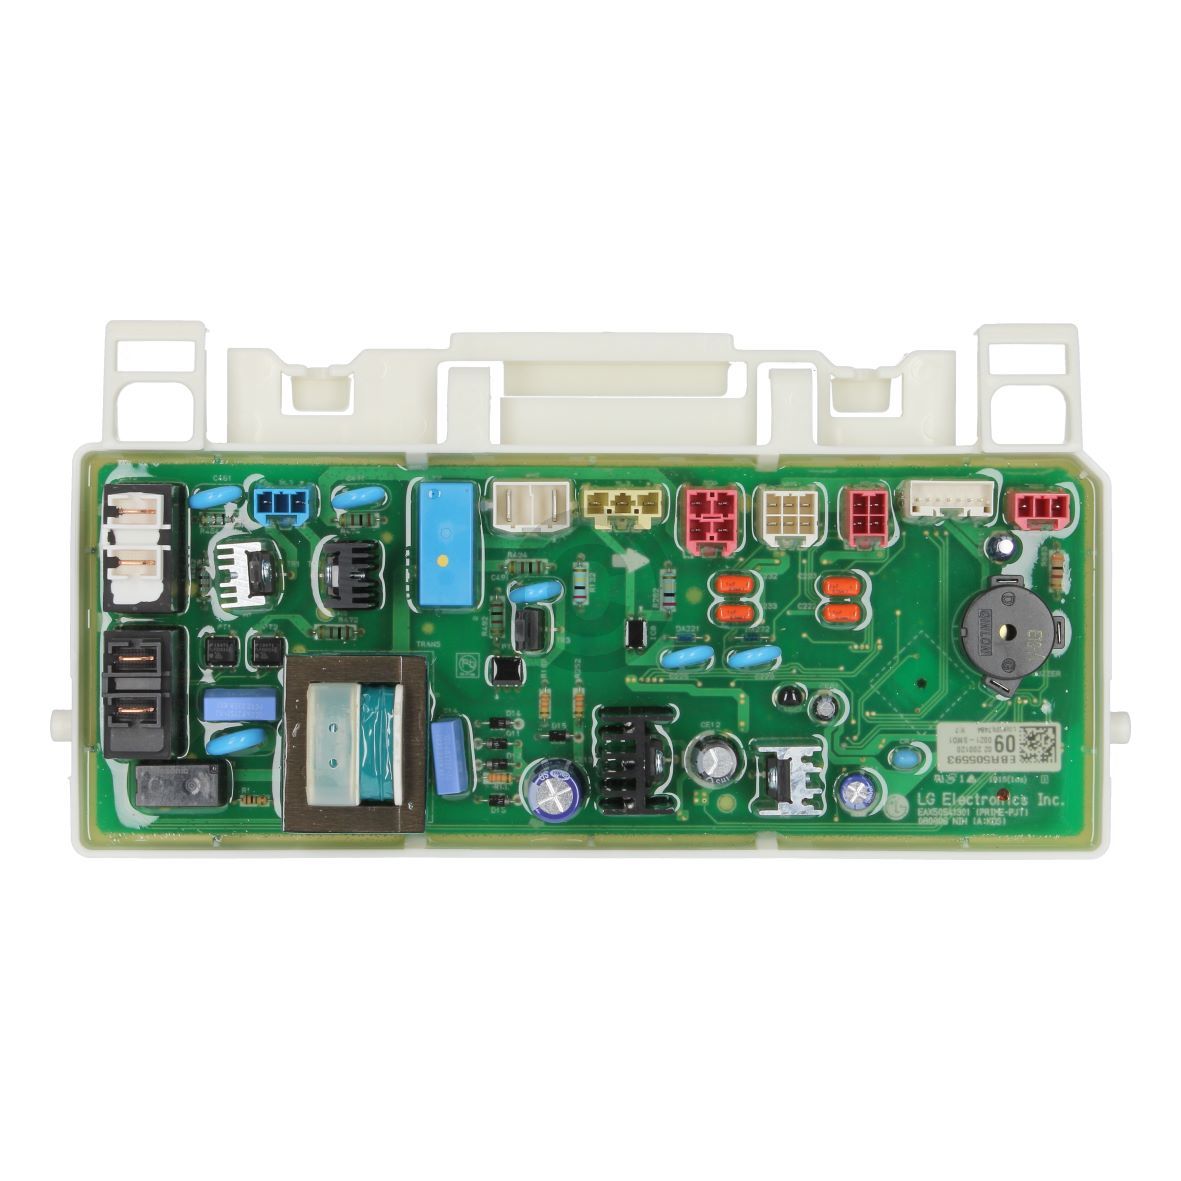 Elektronik LG Electronics  für Trockner (KD-EBR50559309)